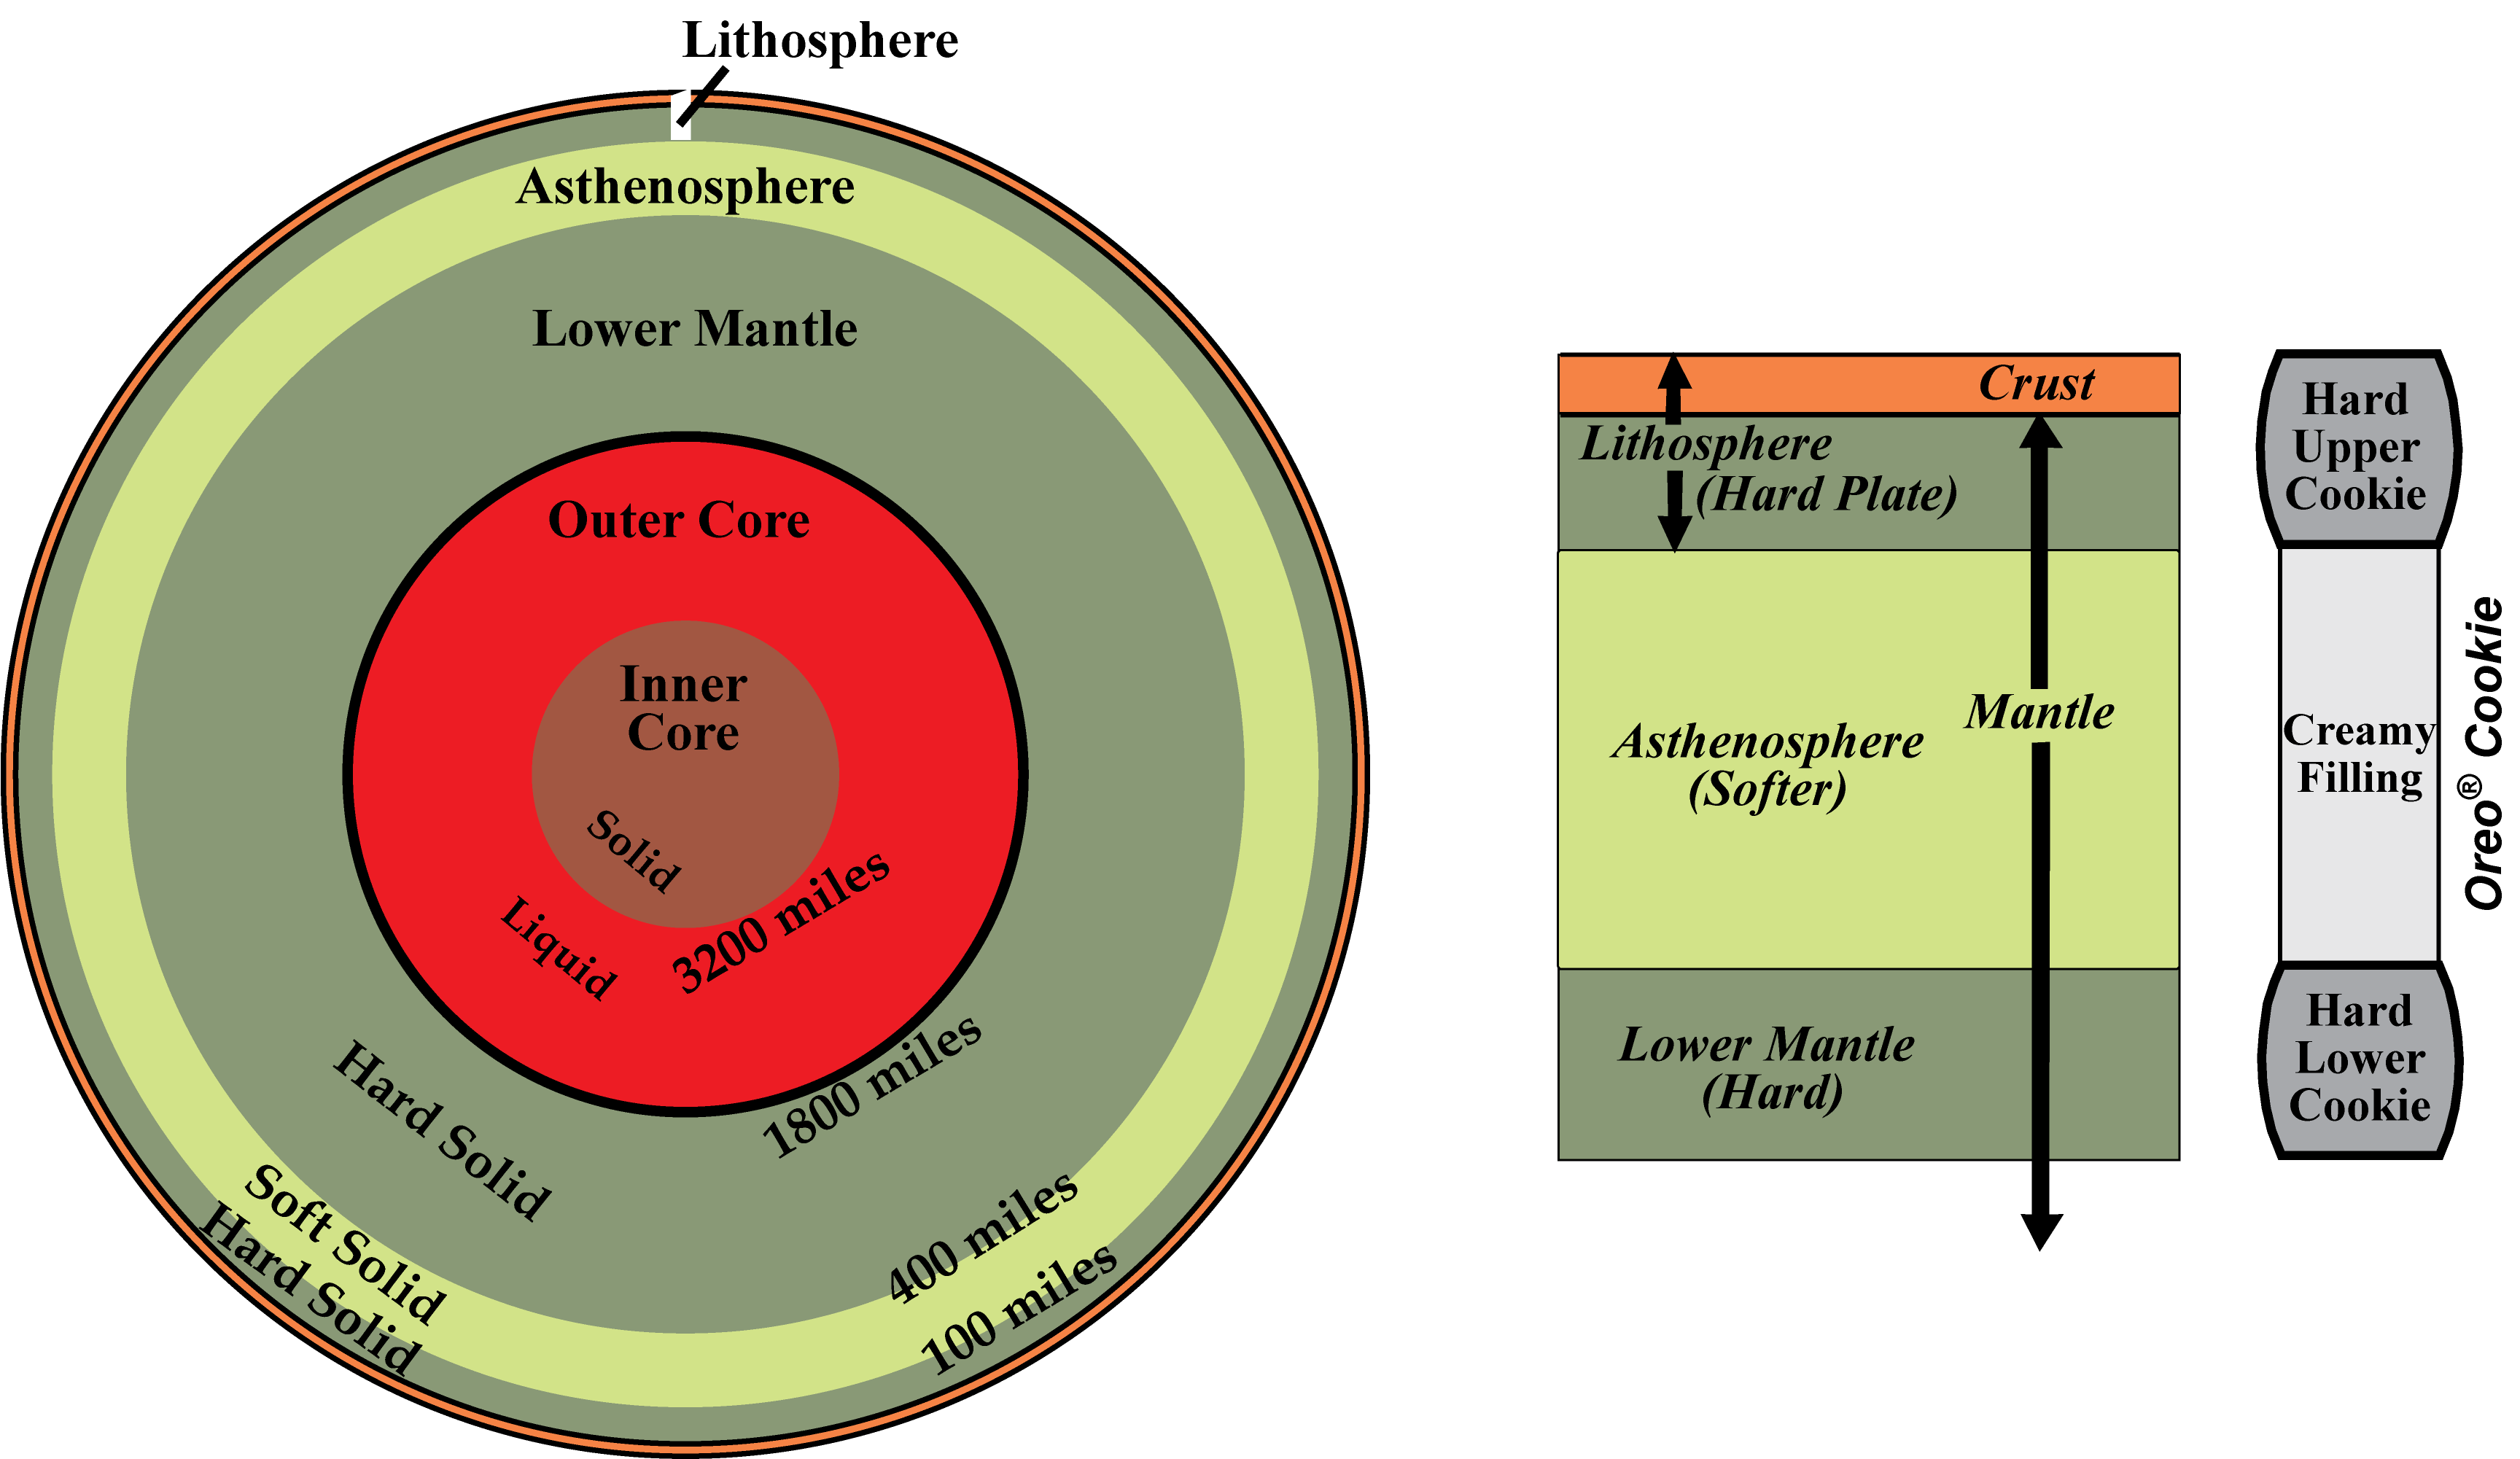 geology earth layers